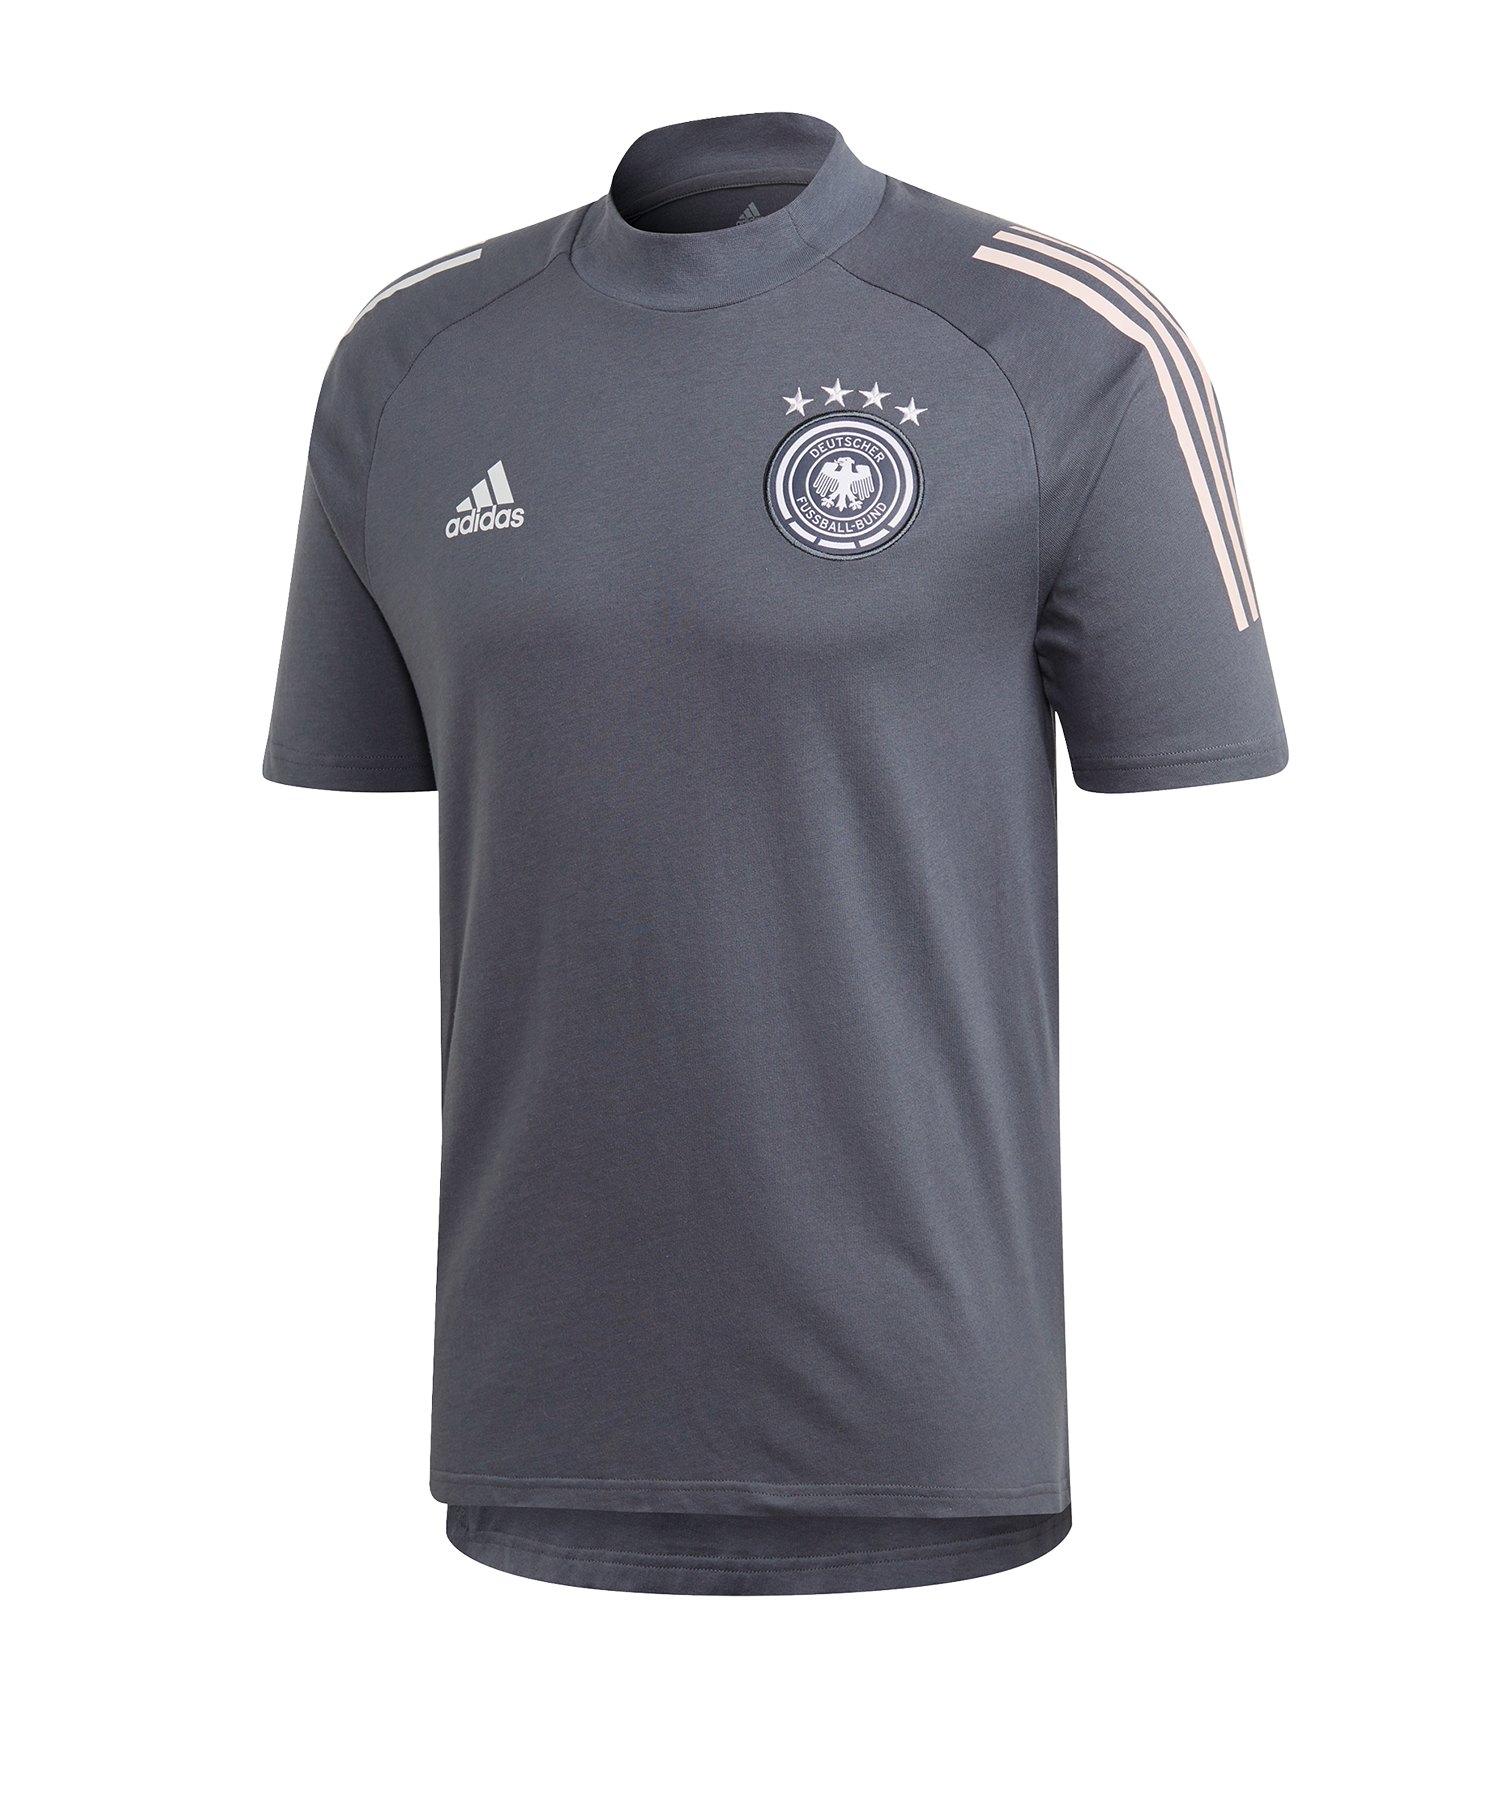 adidas DFB Deutschland Tee T-Shirt Grau - grau